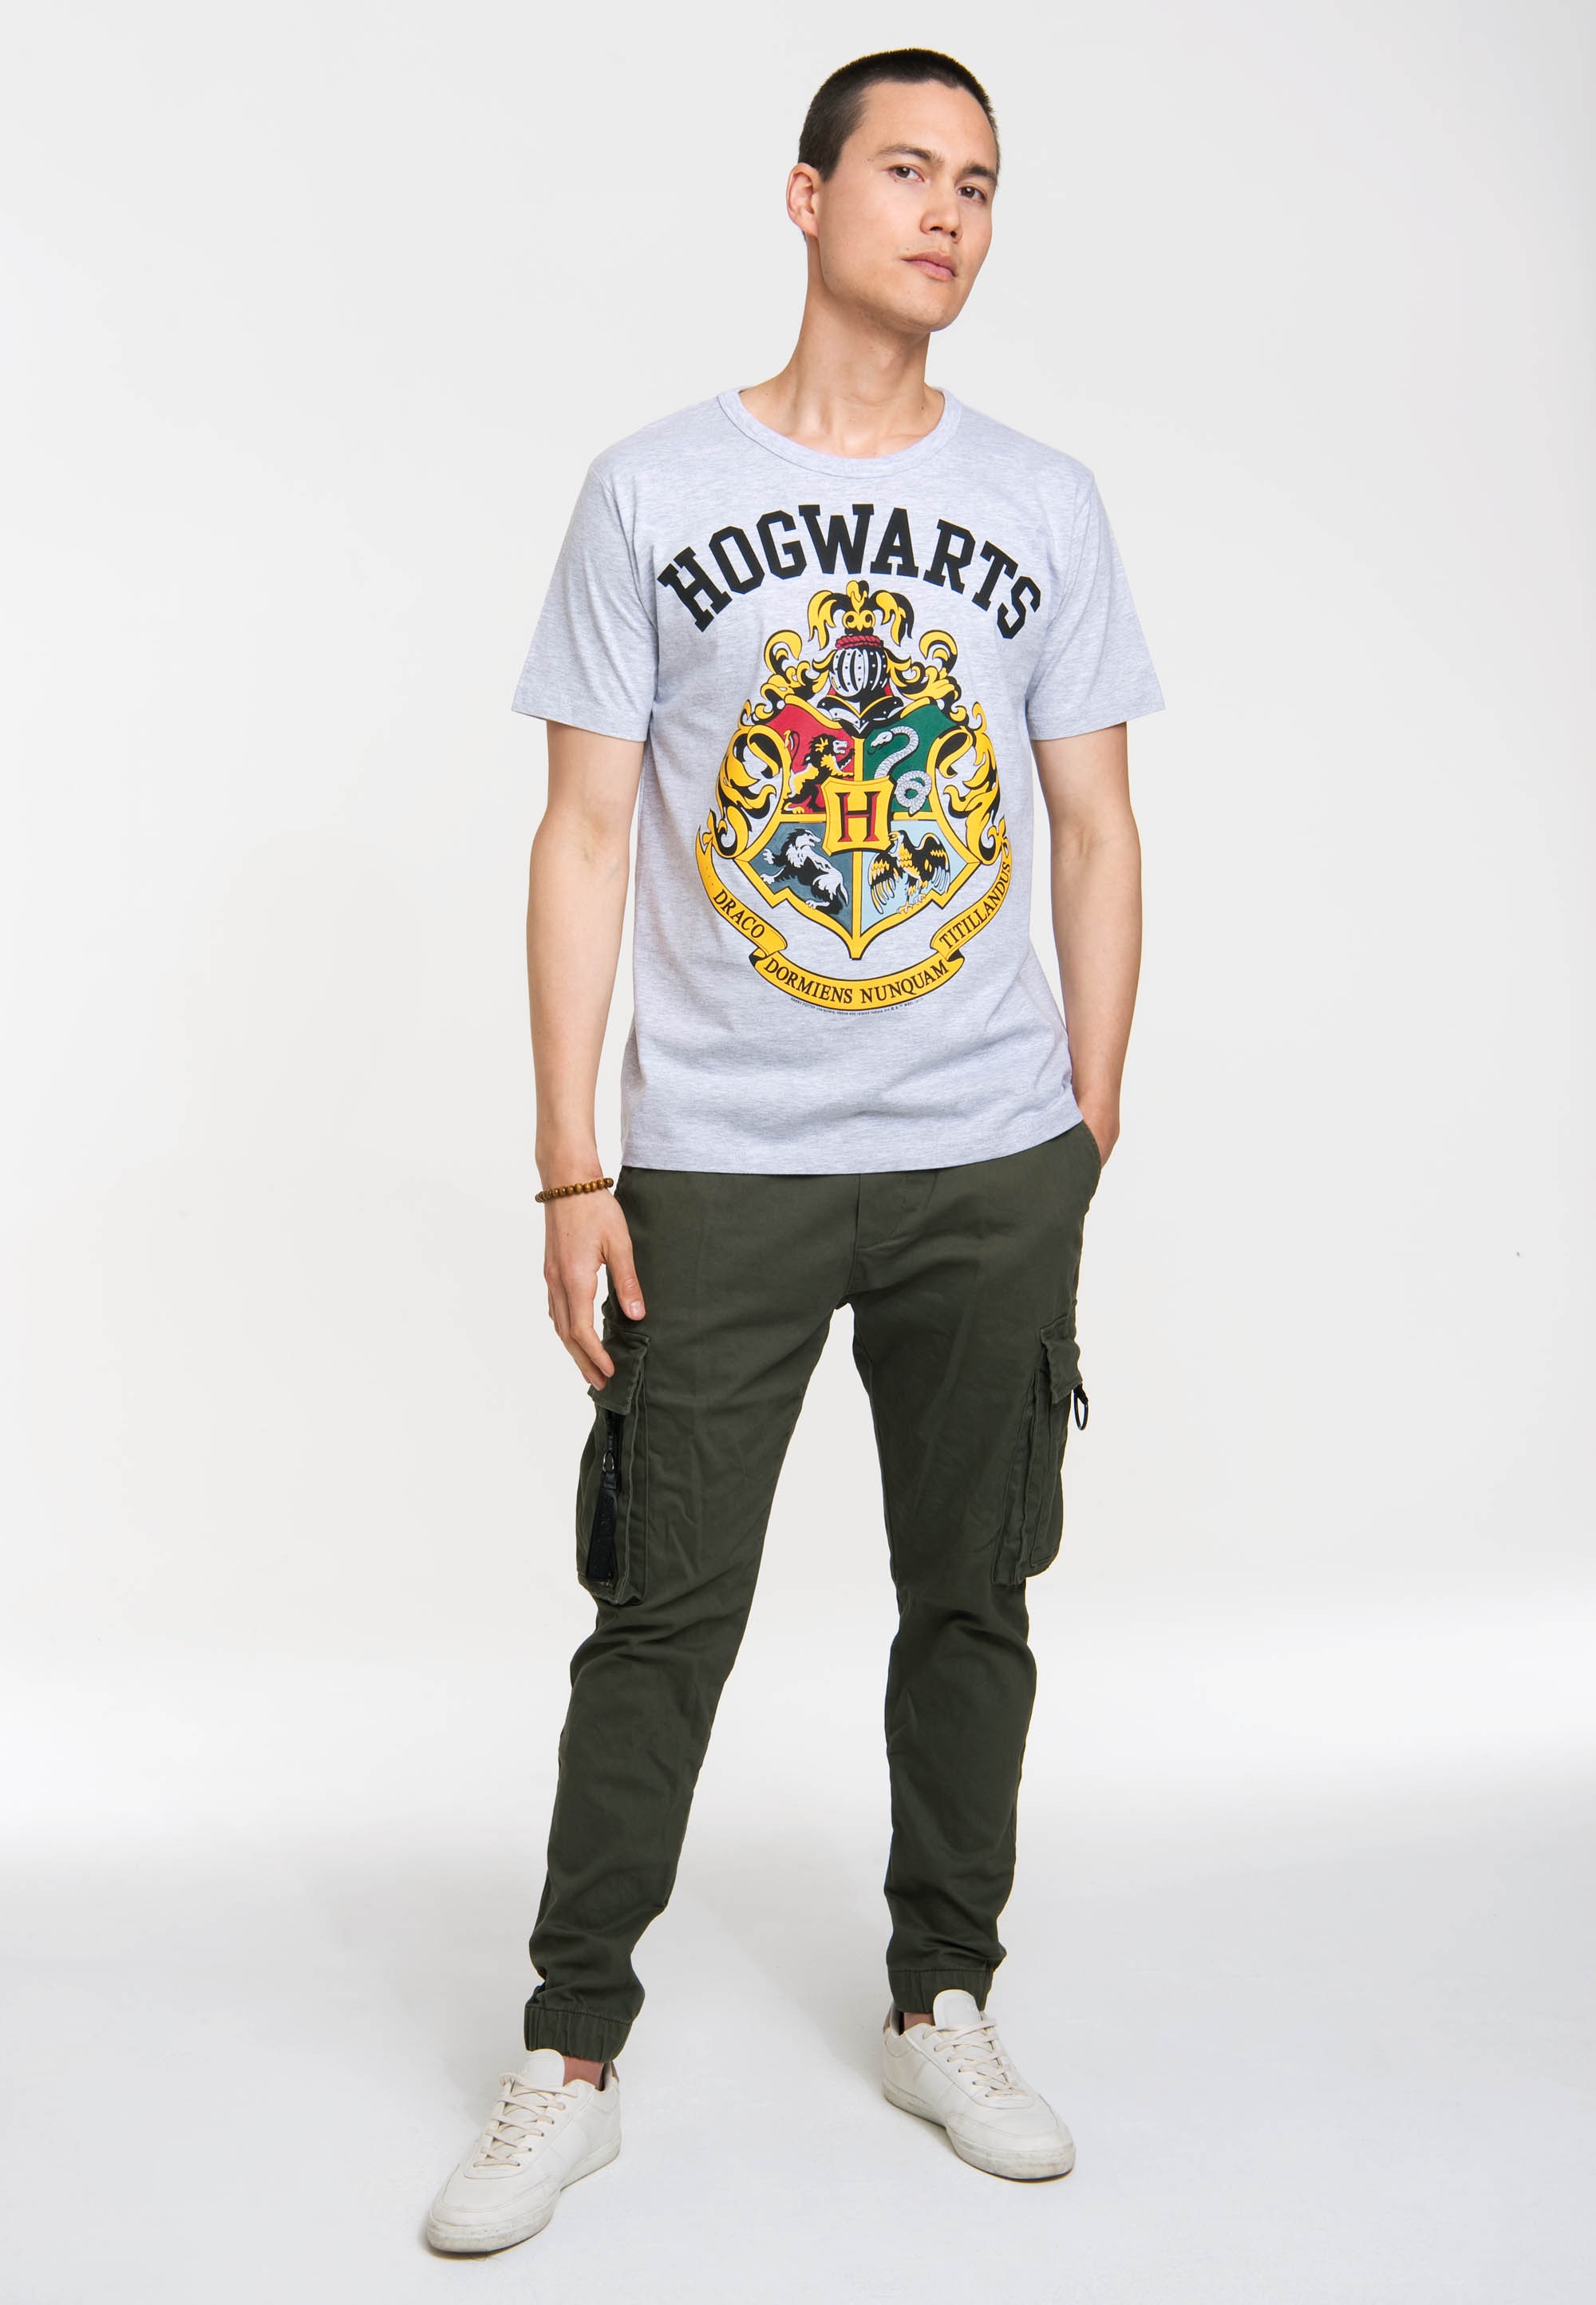 LOGOSHIRT T-Shirt »Hogwarts-Logo«, mit hochwertigem Siebdruck